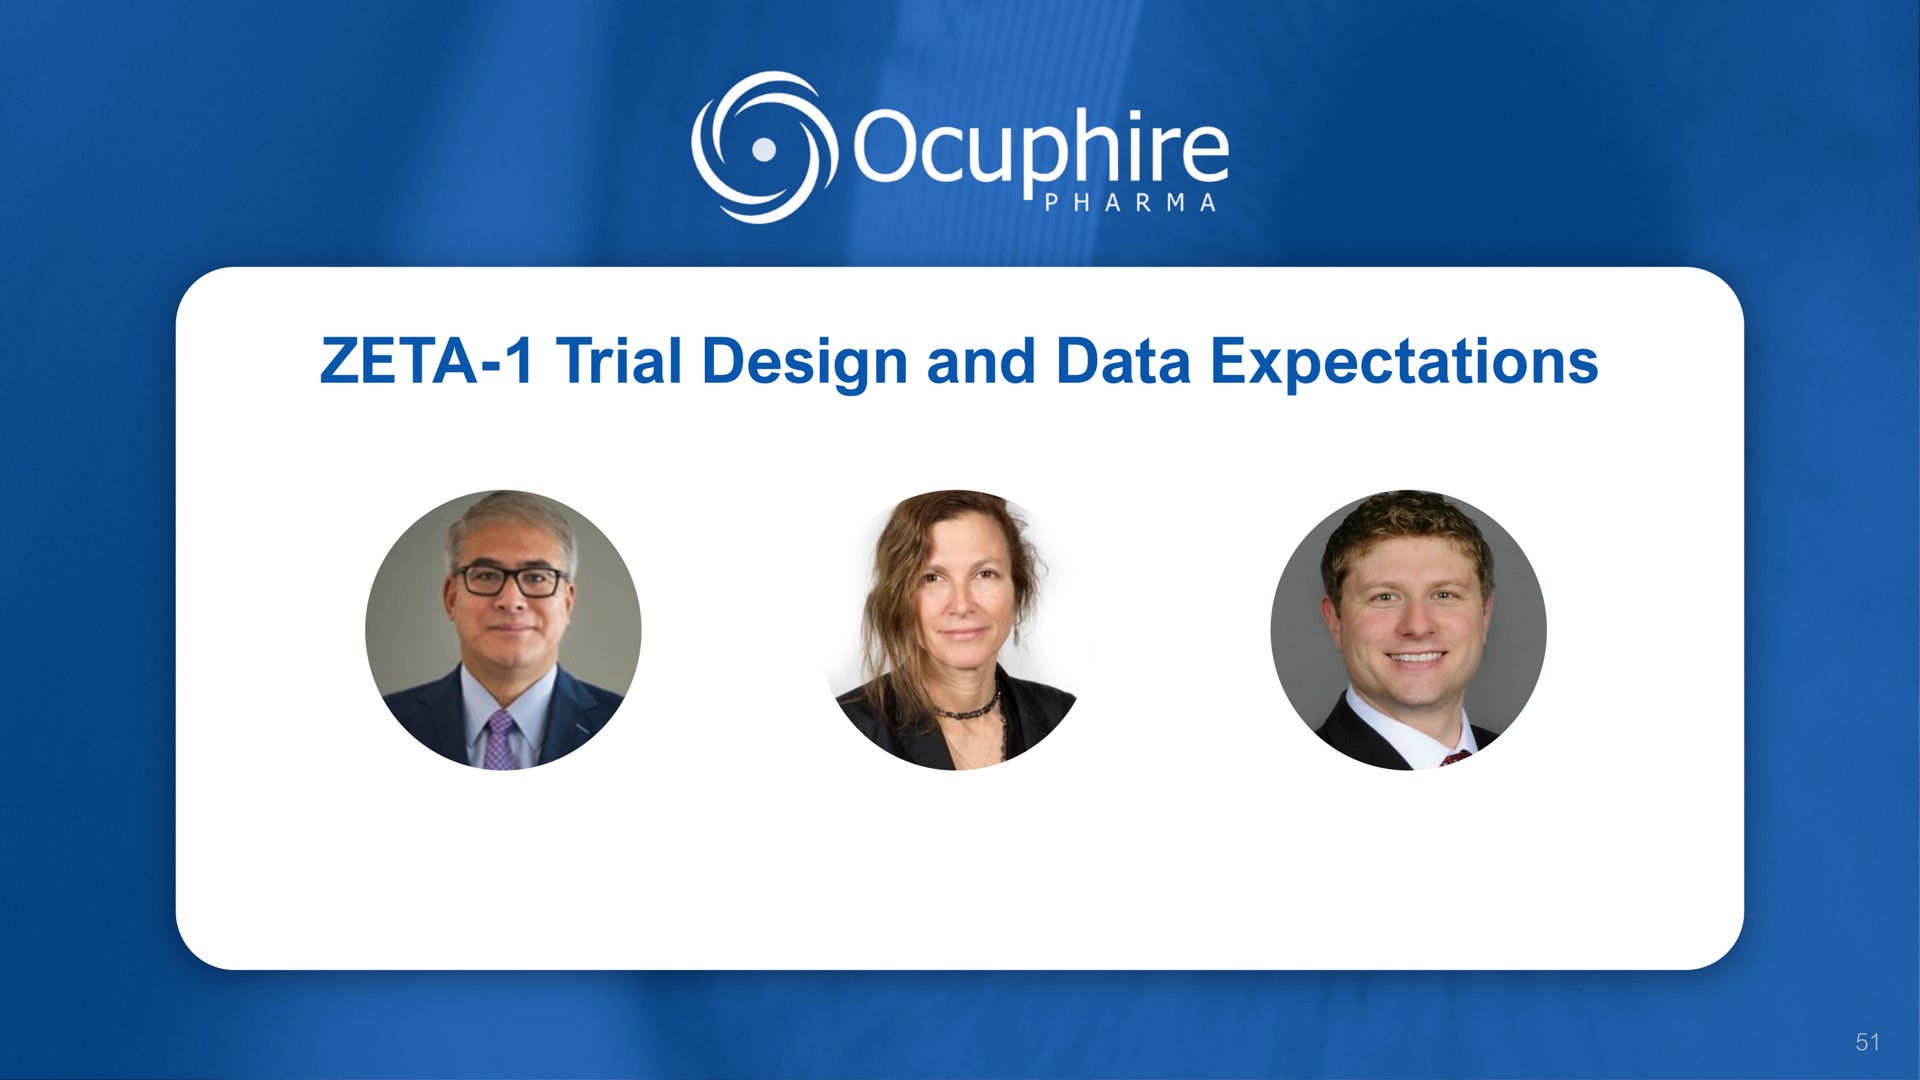 zeta trial design and data expectations | Ocuphire Pharma